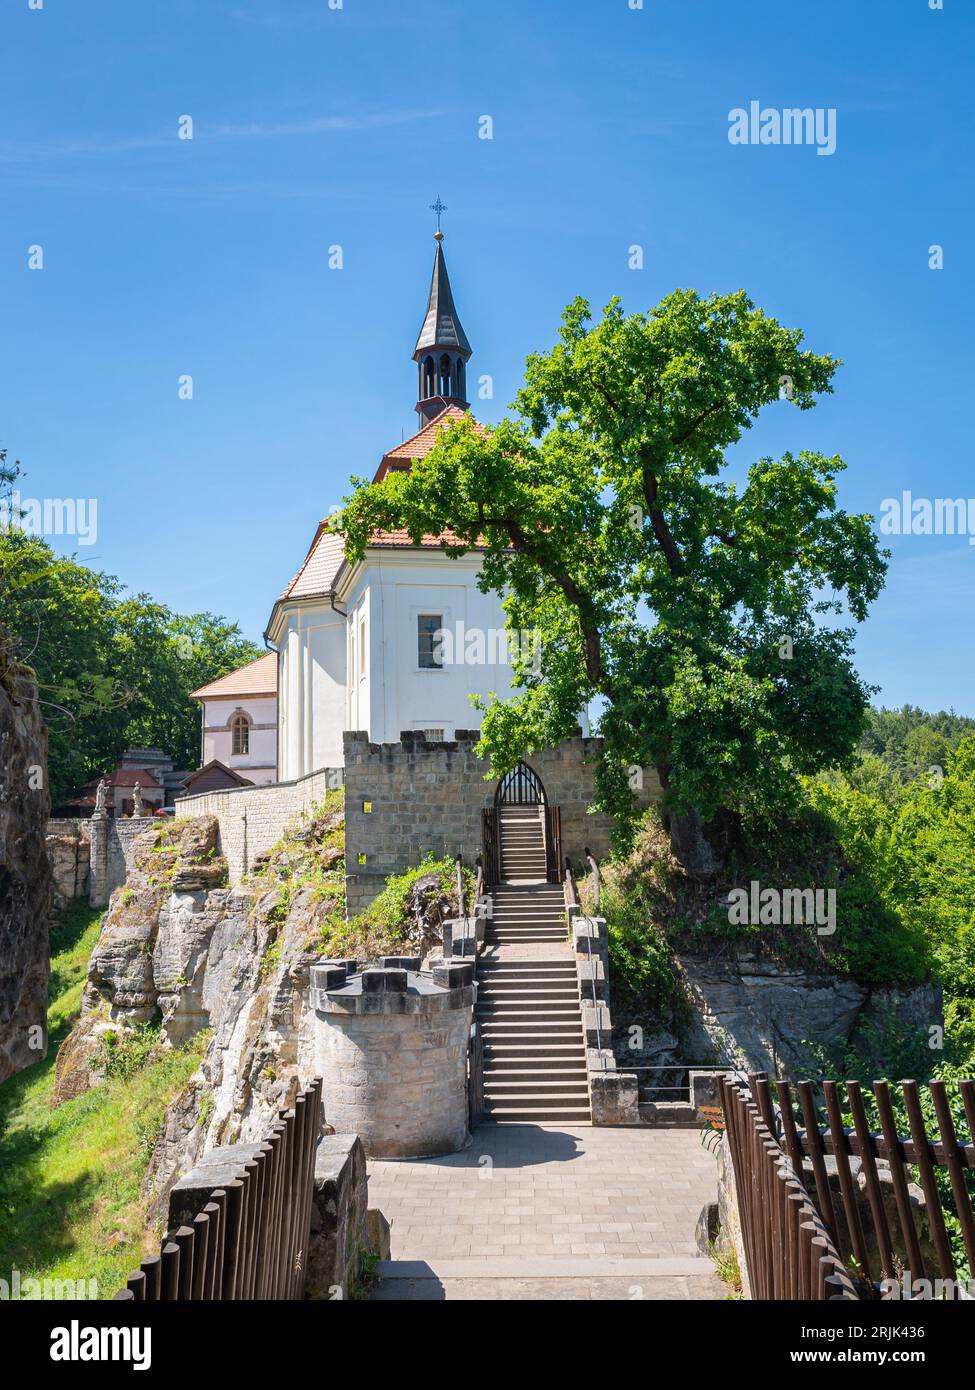 Church in the courtyard of Valdštejn Castle in Bohemia, Czechi Republic Stock Photo